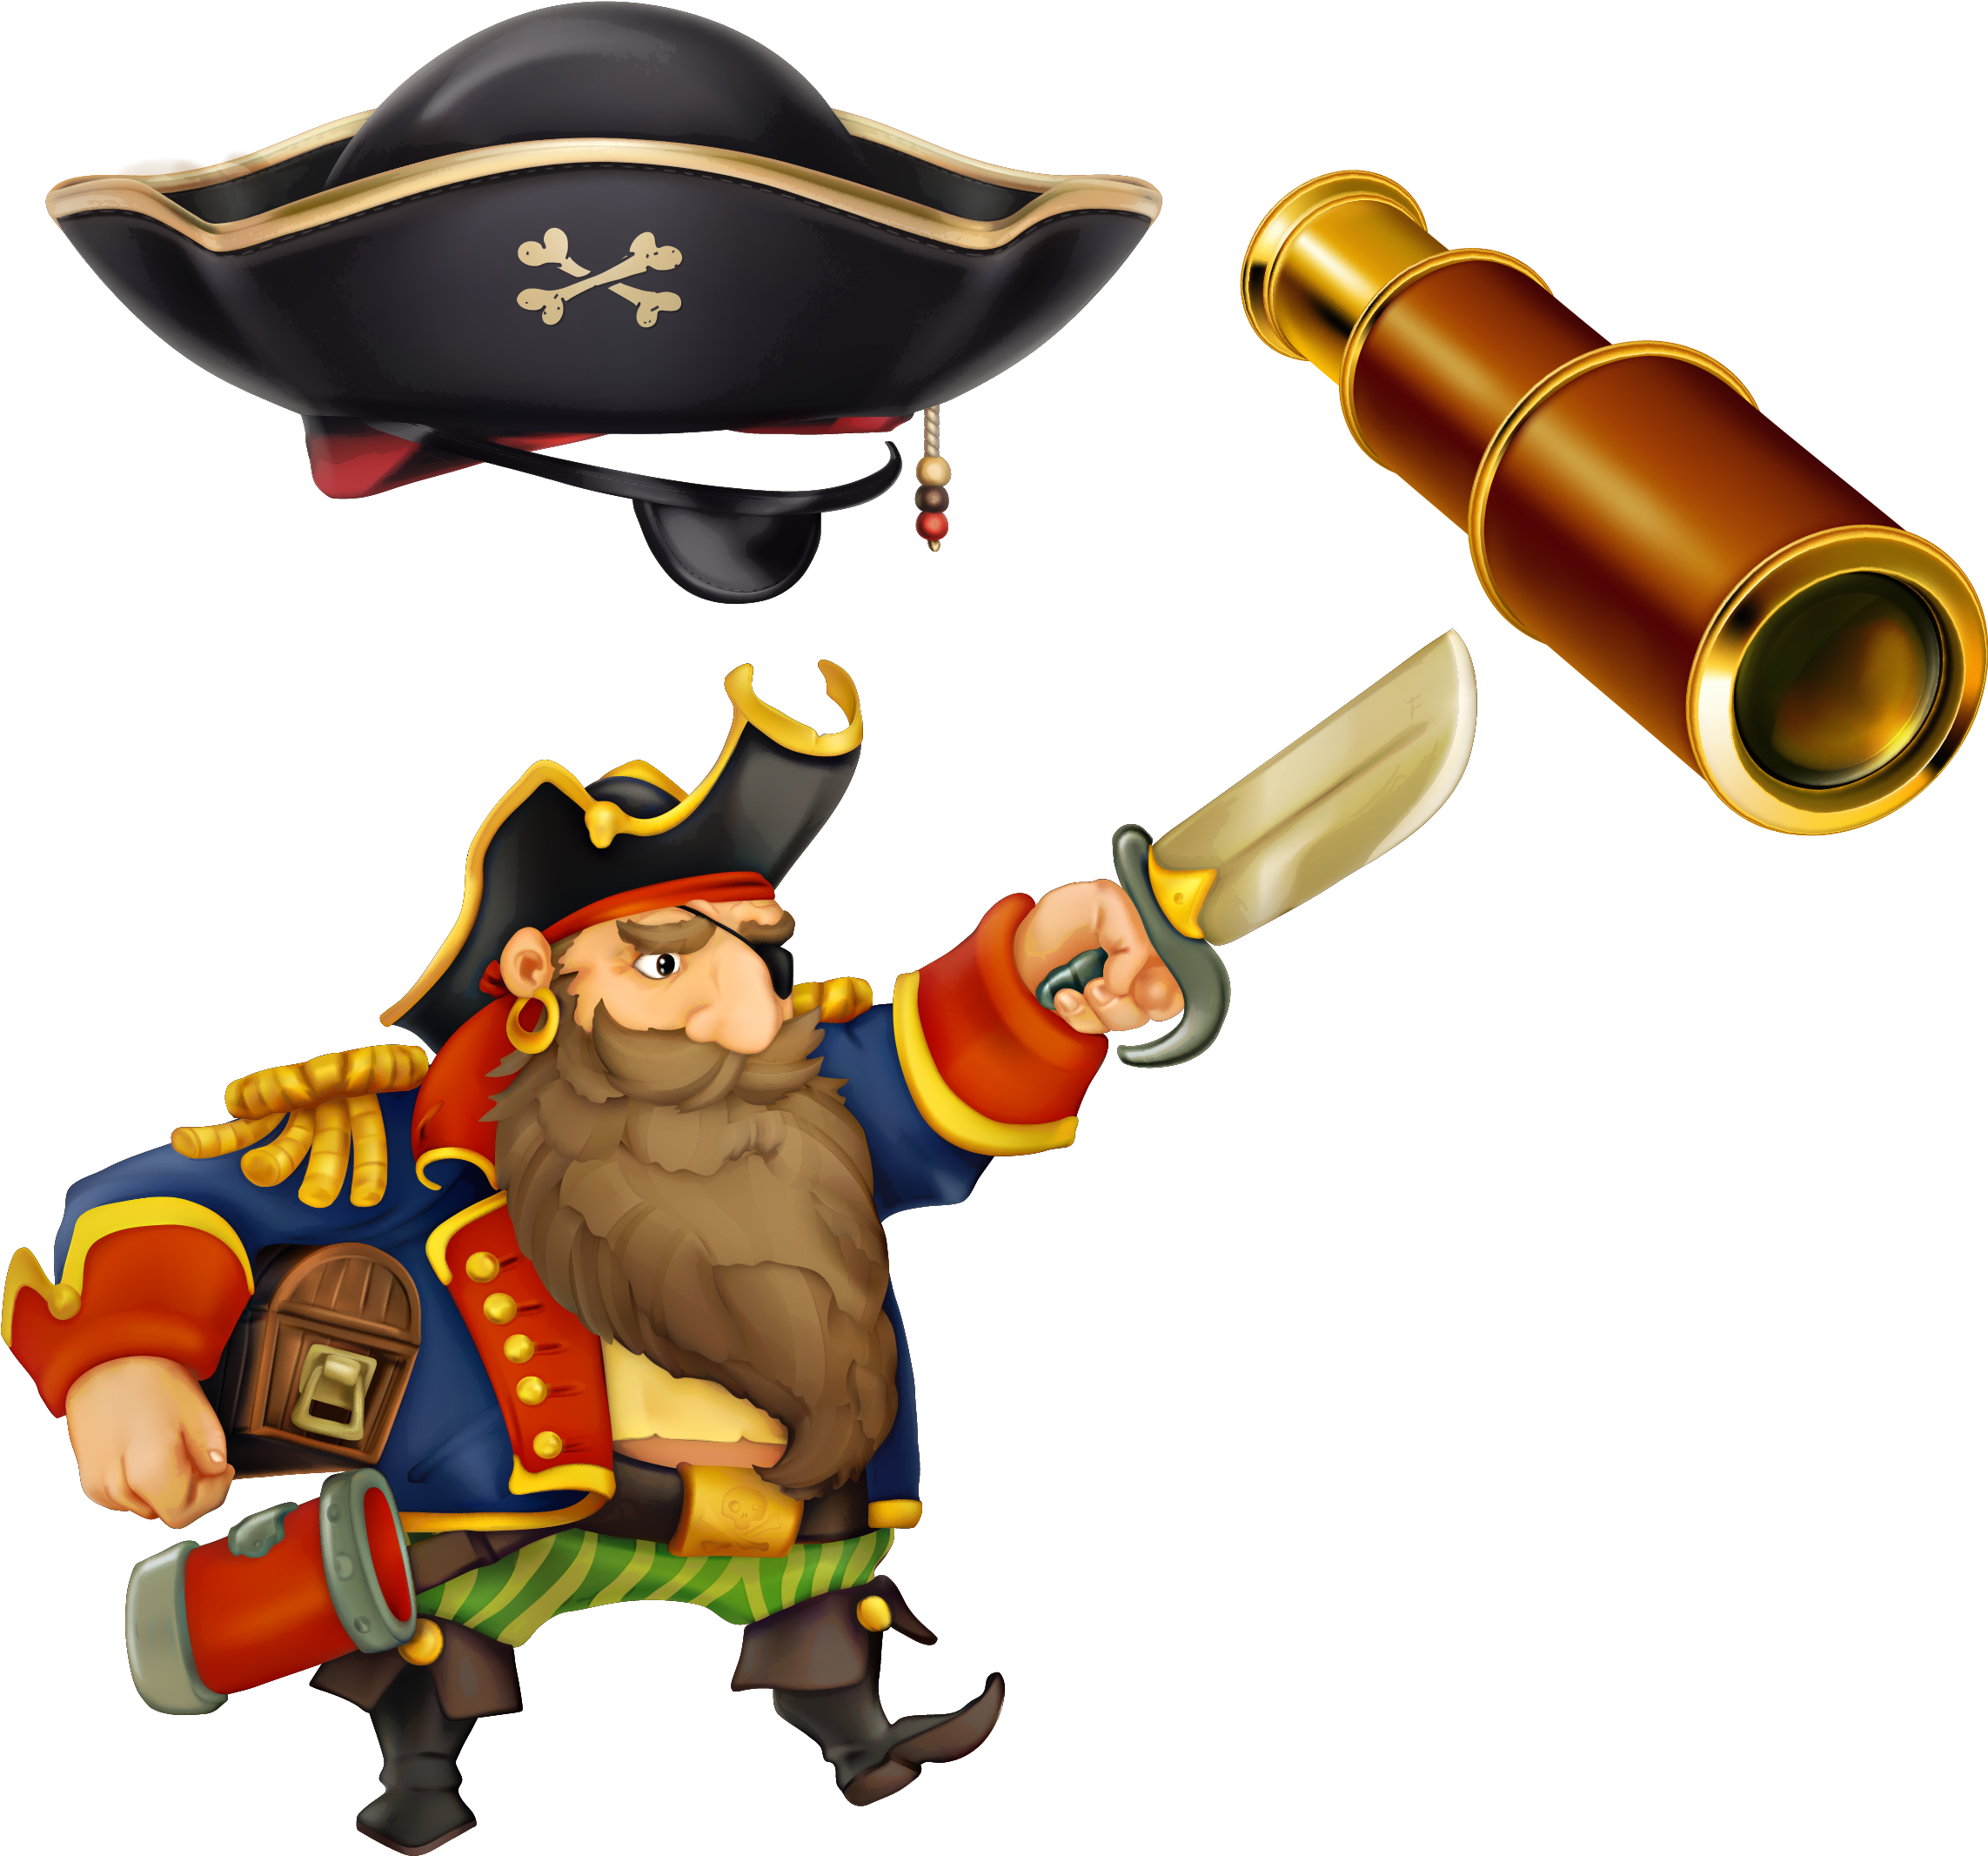 Cartoon Piracy Pirates Of The Caribbean Illustration - Pirate (2330x2247)